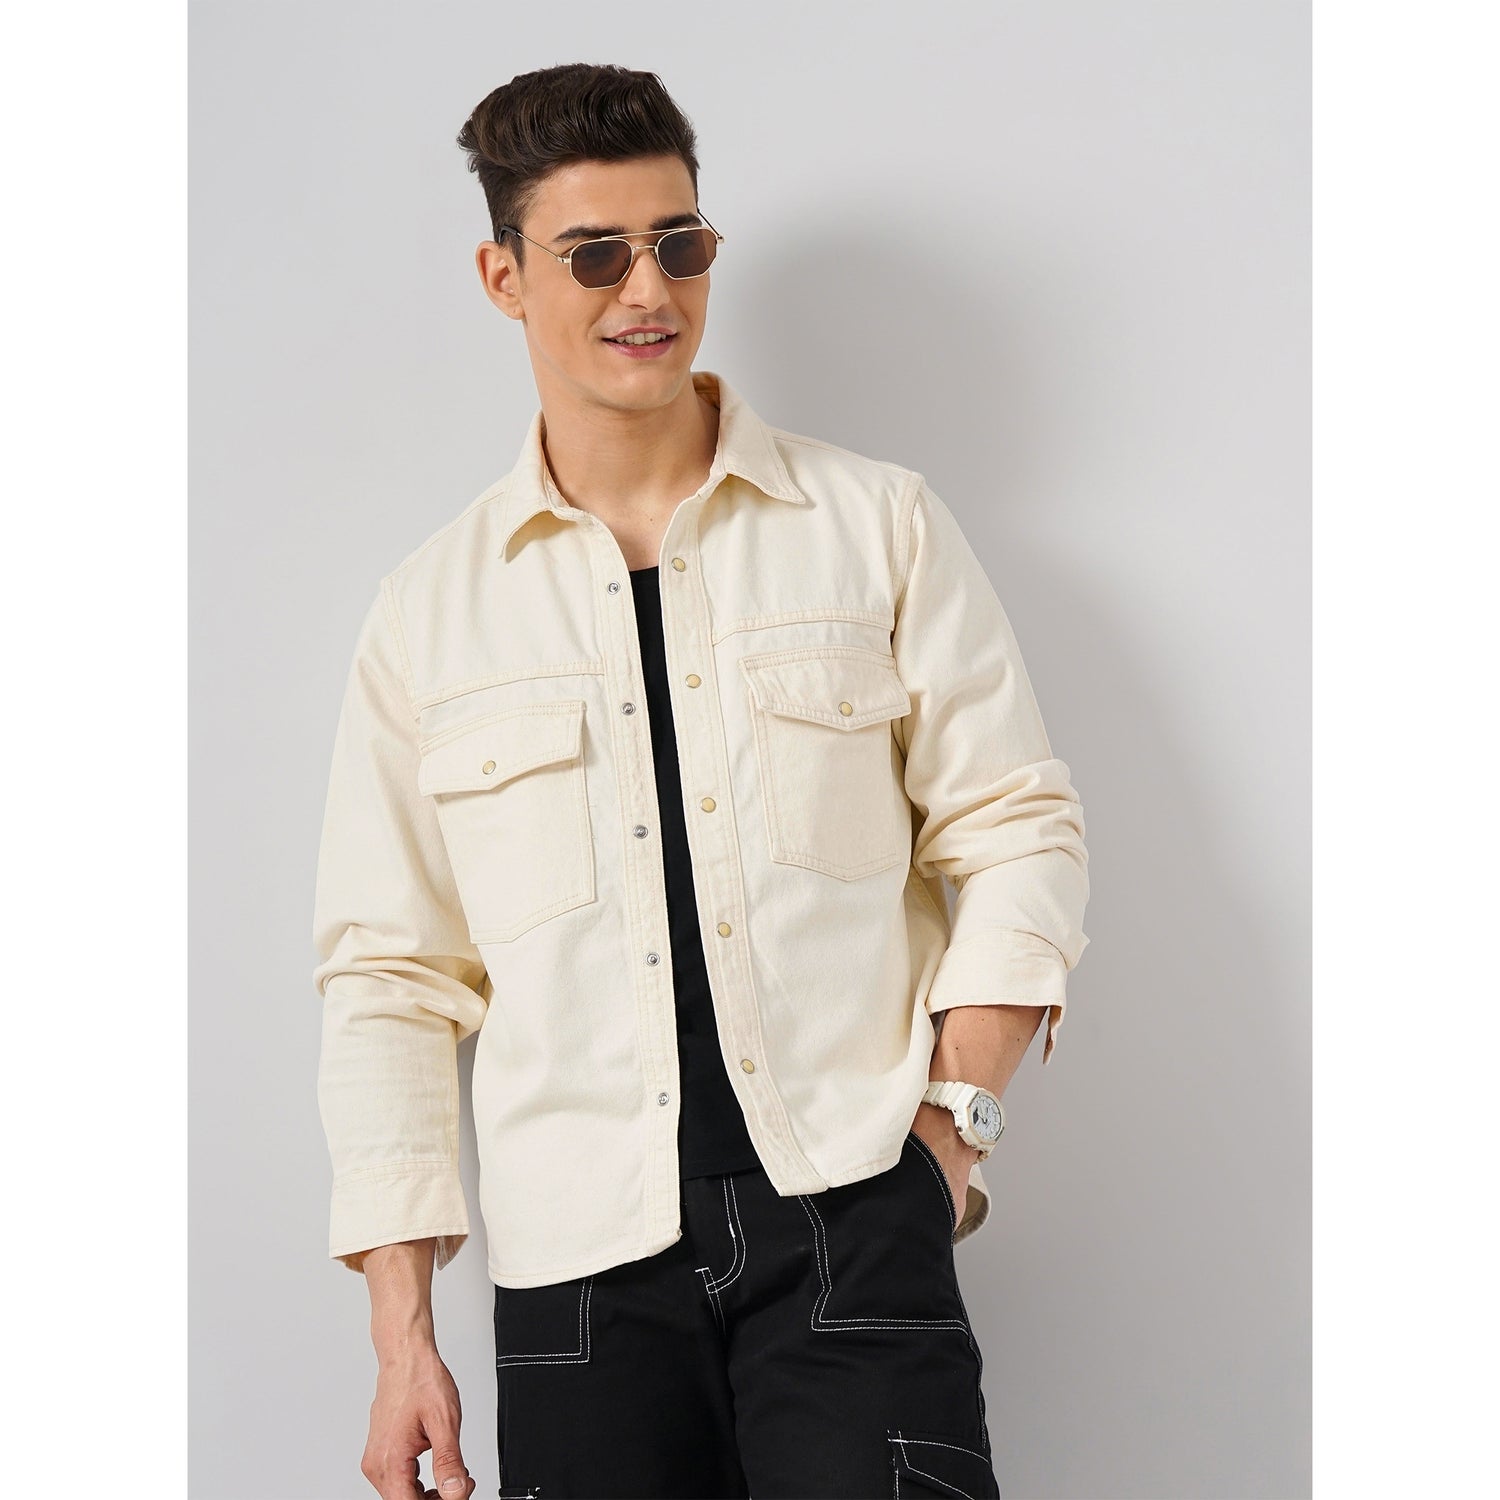 Men Off White Spread Collar Solid Oversized Cotton Casual Shirt (GASUNIM)